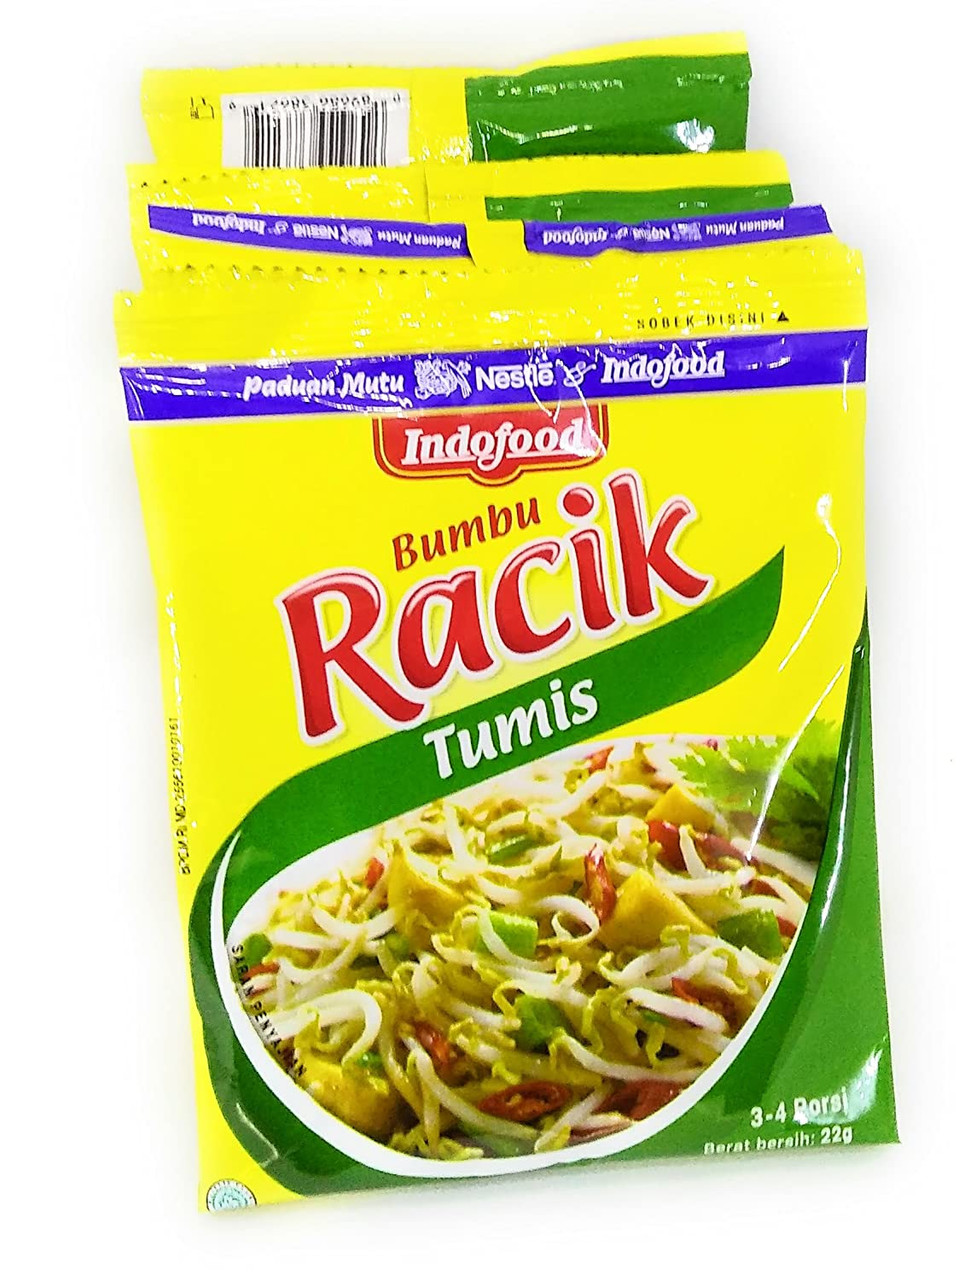 Indofood Racik Tumis (Instant Stir-fried Seasoning), 22 Gram (10 sachets) 